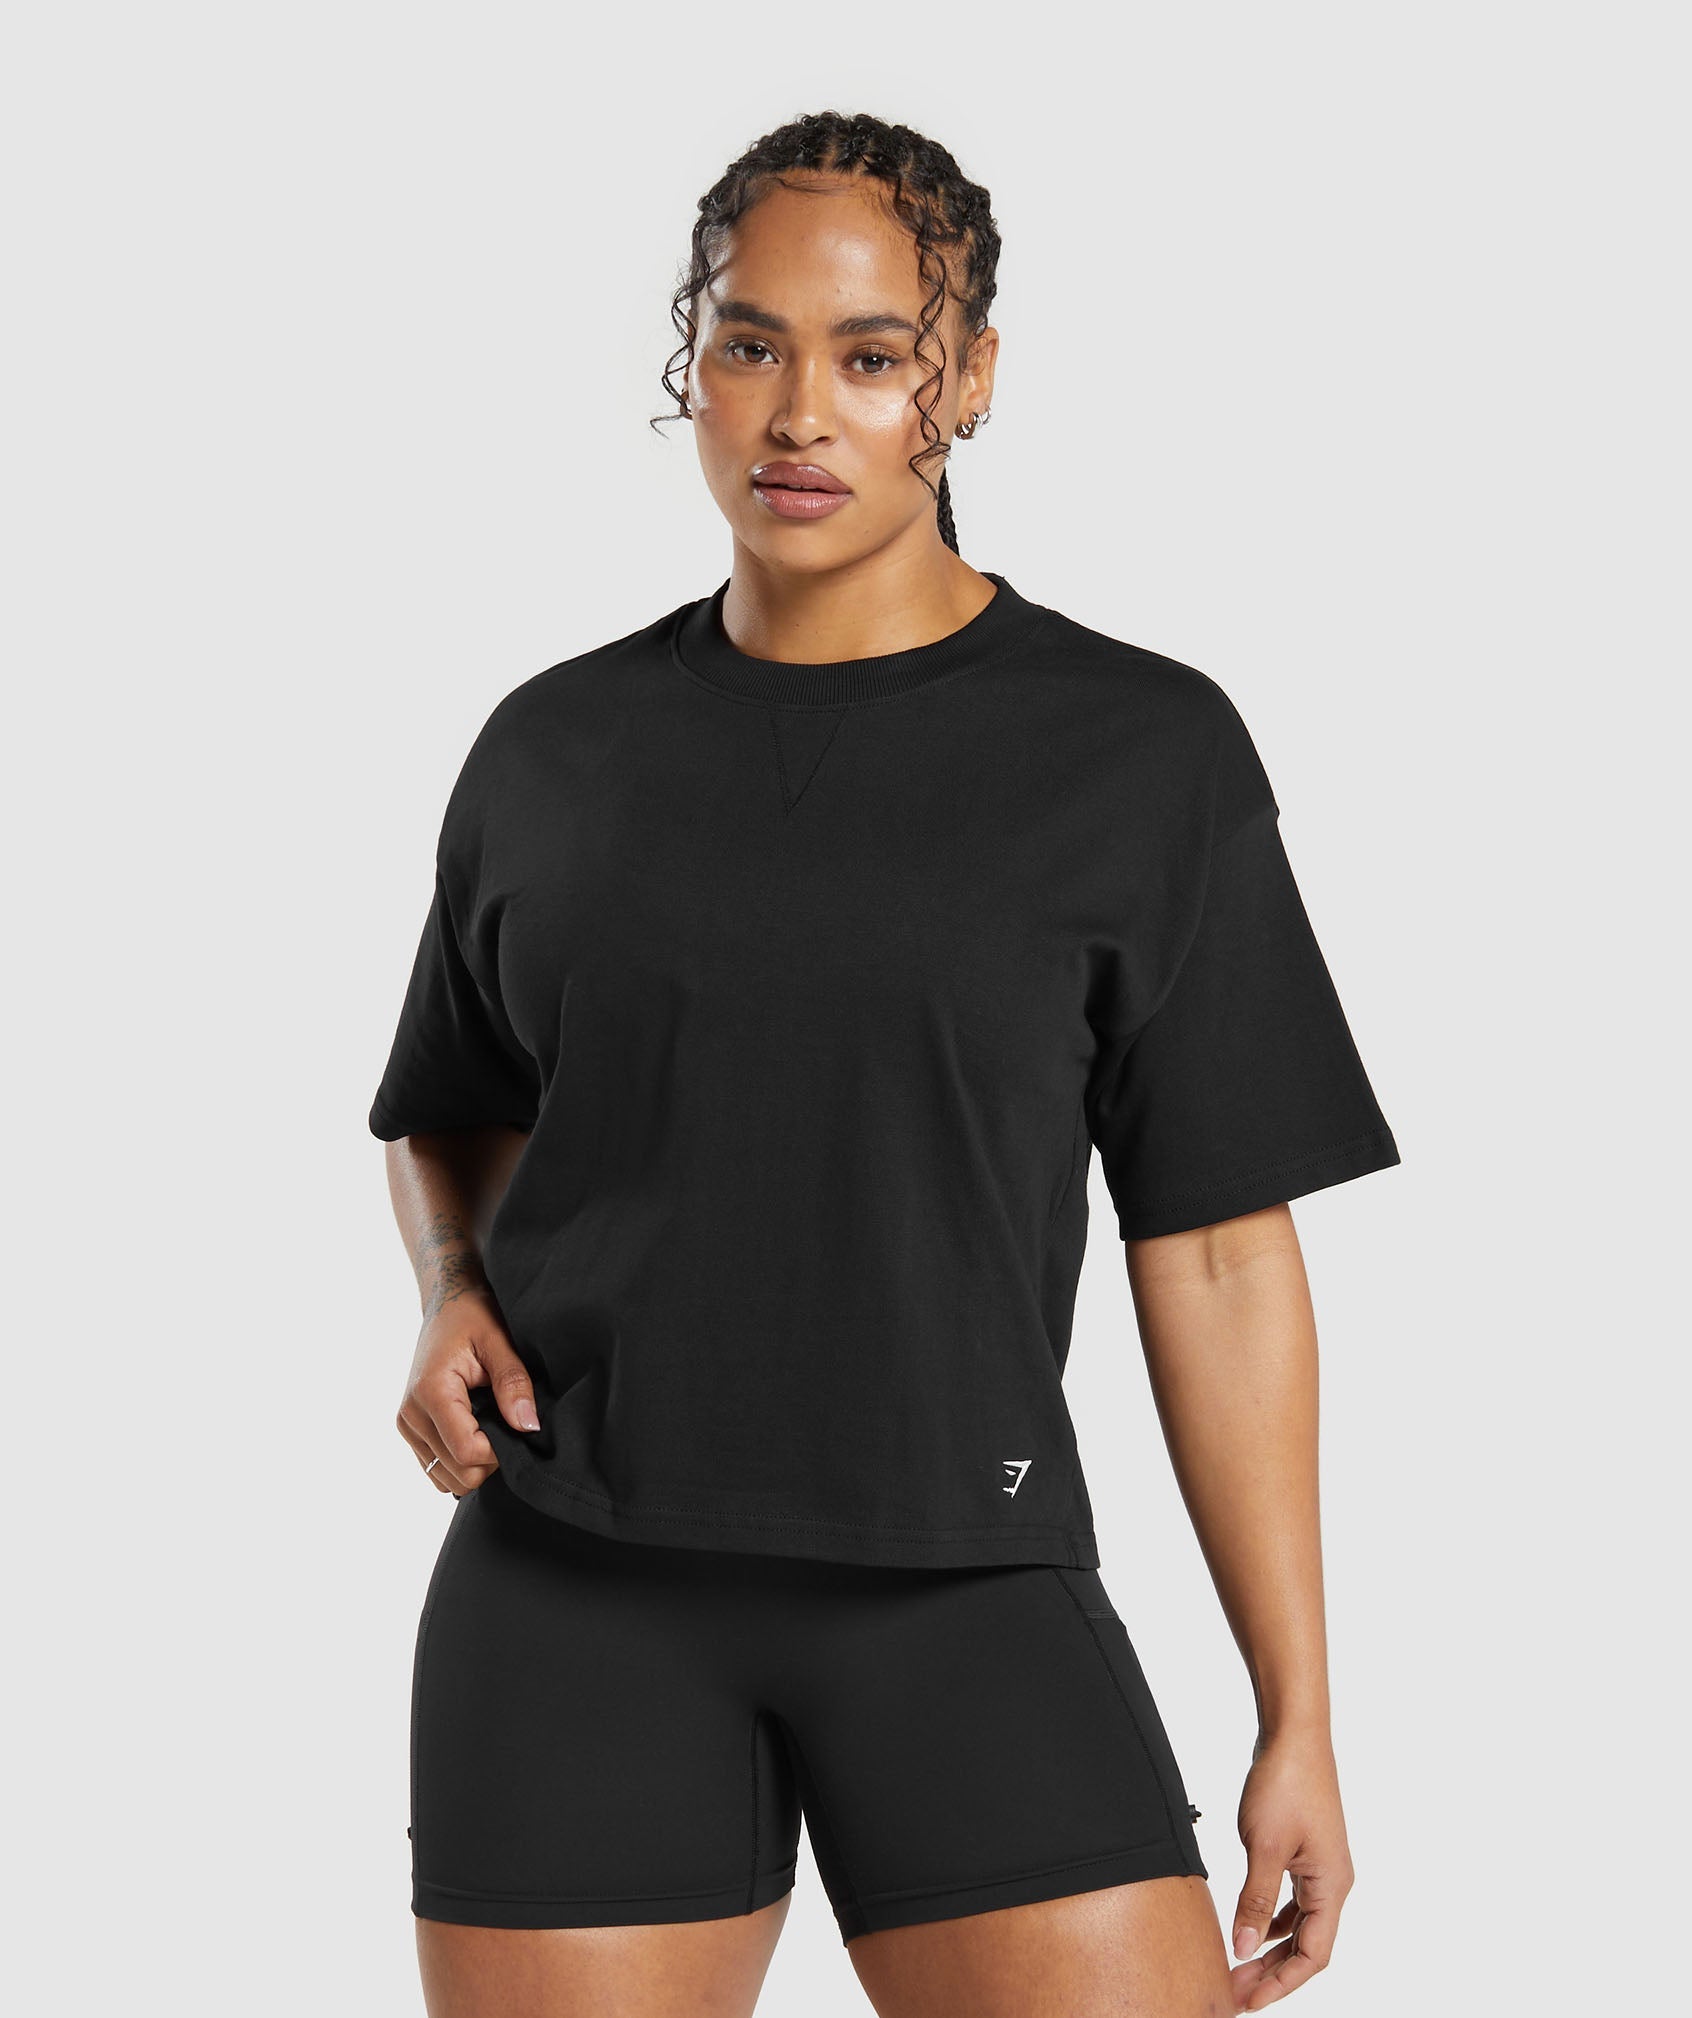 Gymshark Women's Training Alone Graphic T-Shirt, Black, Medium :  : Fashion